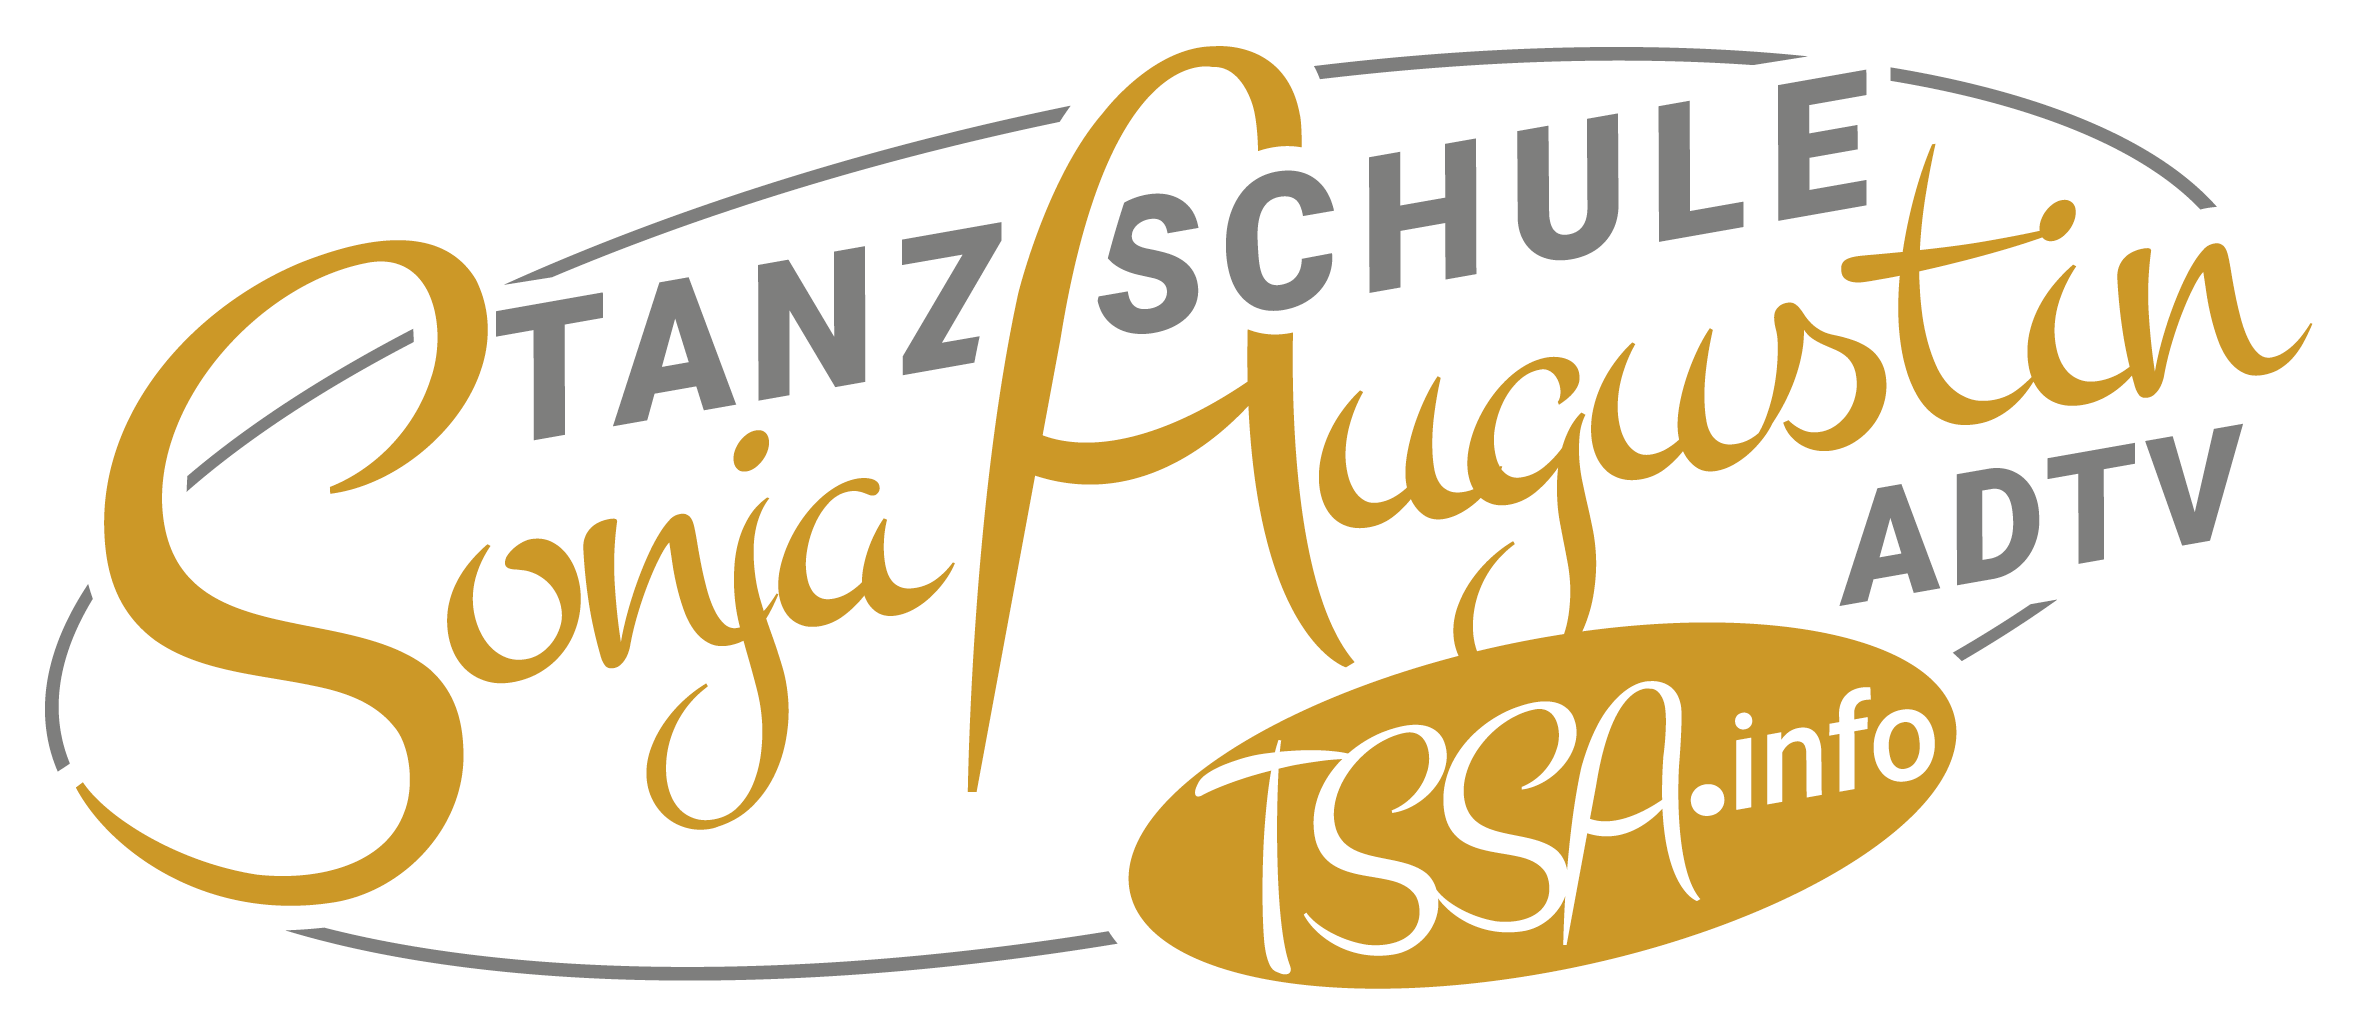 ADTV Tanzschule Sonja Augustin Logo